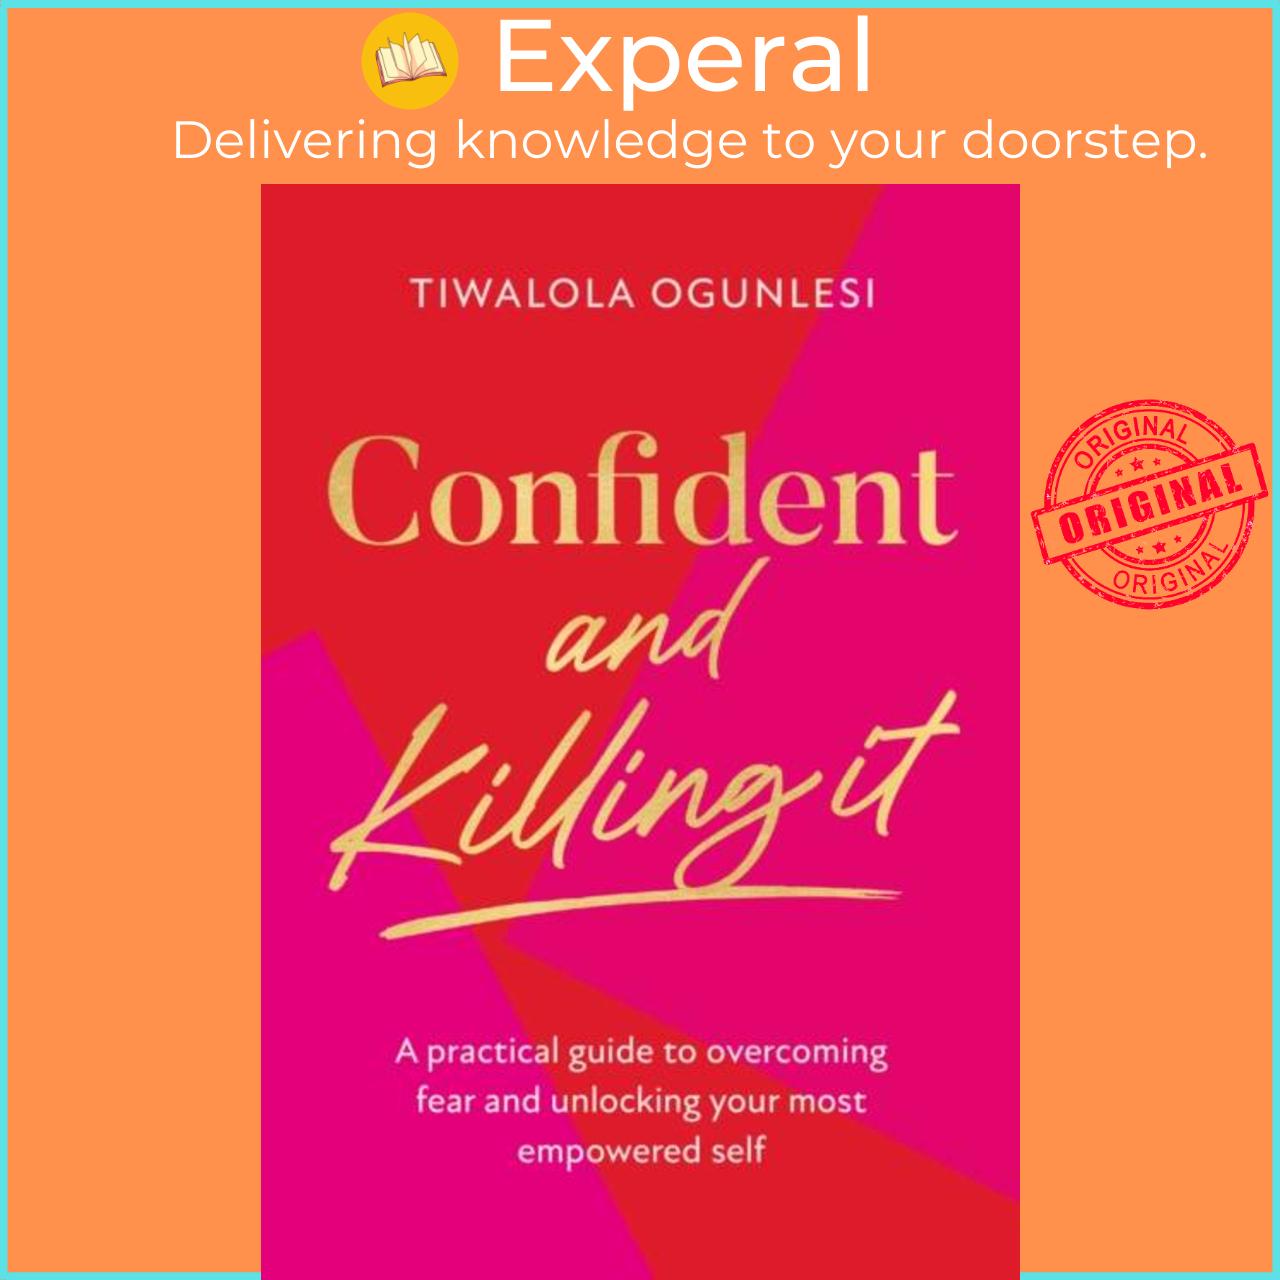 Sách - Confident and Killing It by Tiwalola Ogunlesi (UK edition, paperback)